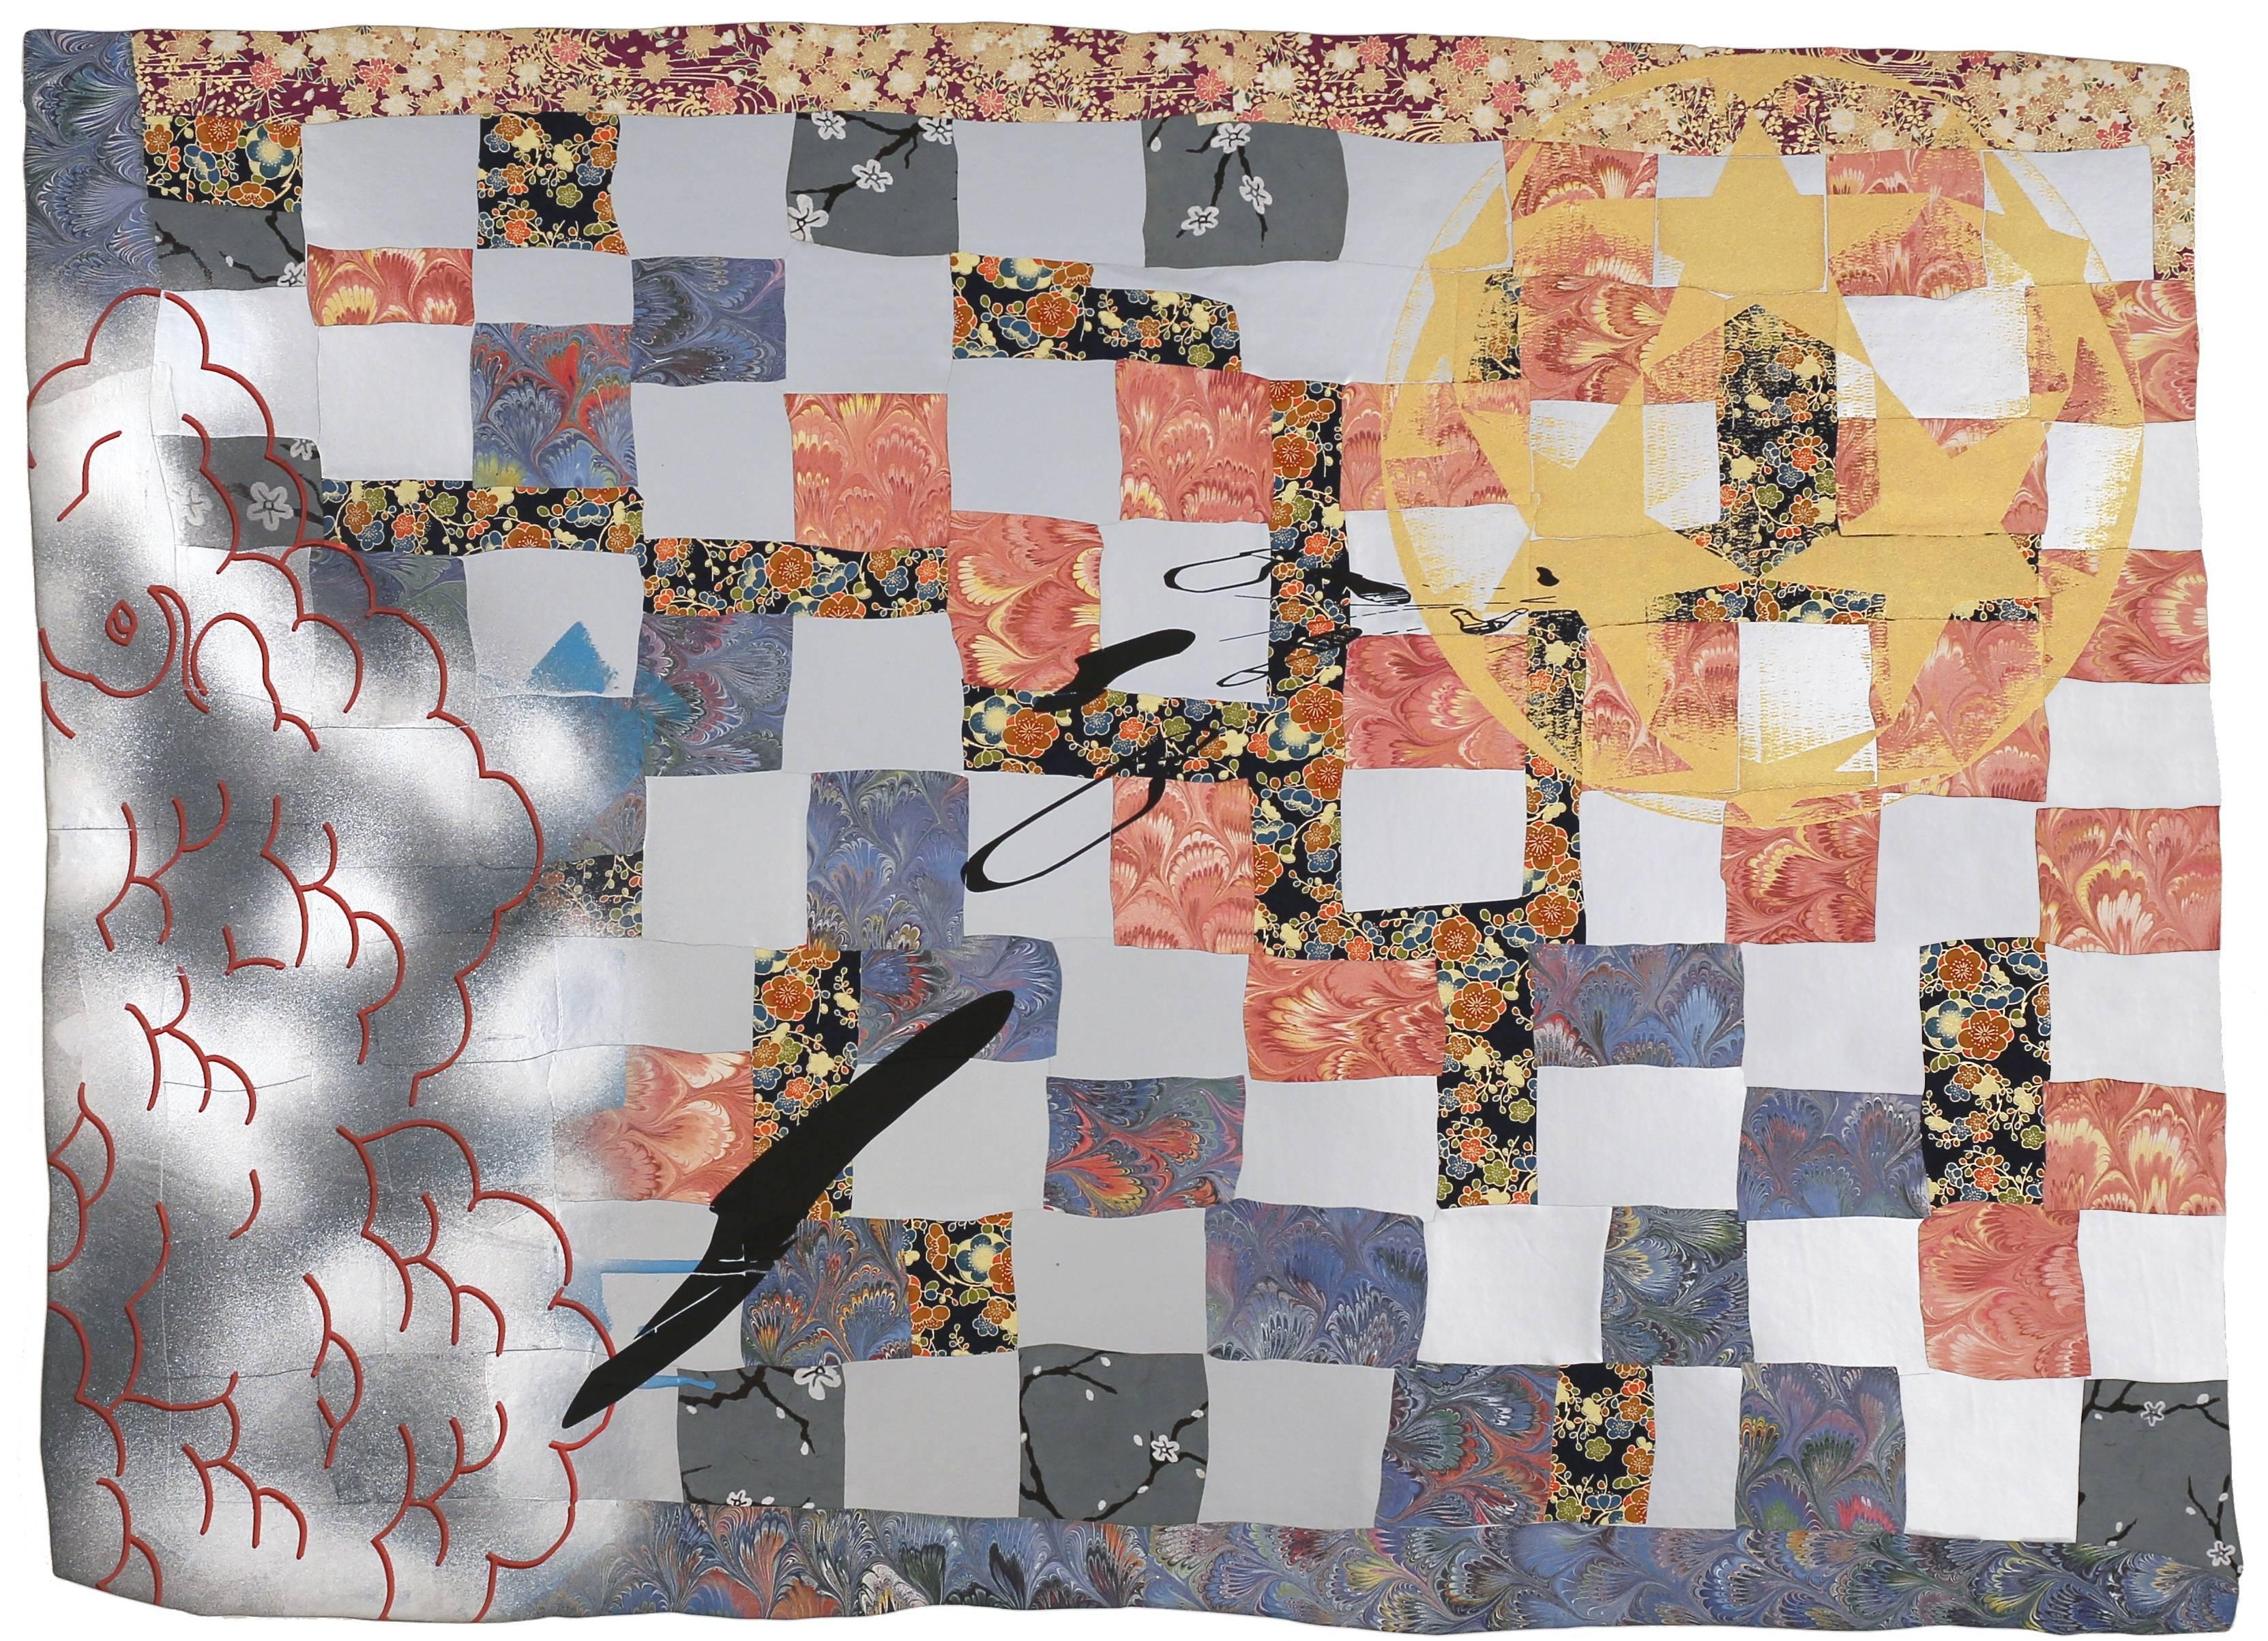 Sanford Biggers Abstract Print - The Floating World: Otsukimi